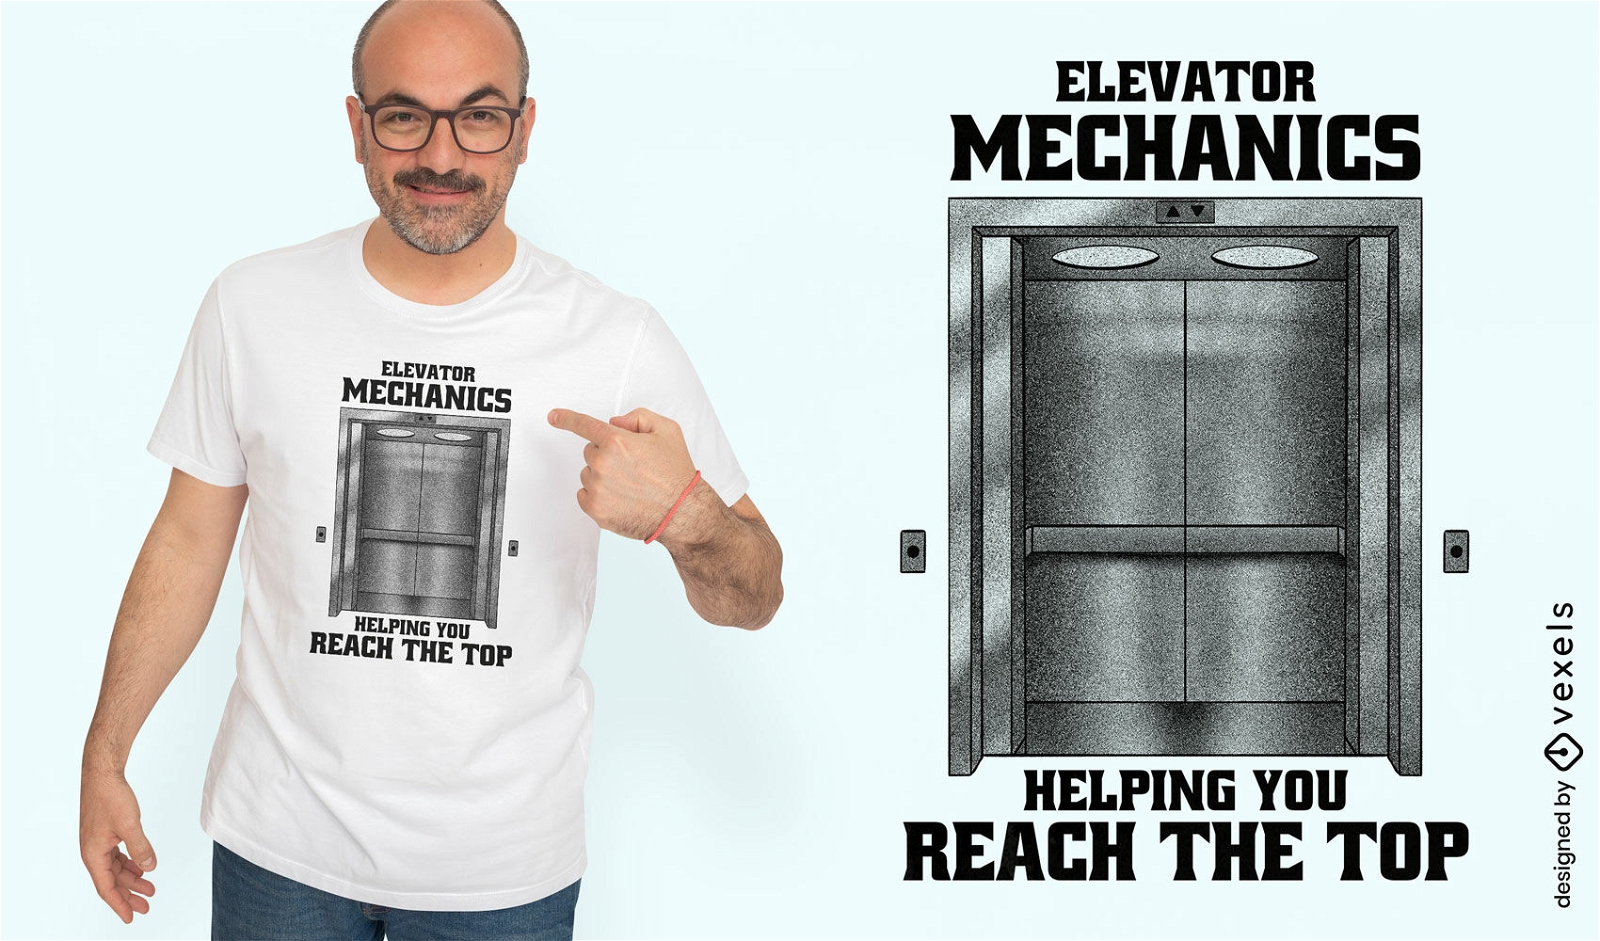 Elevator Mechanics quote t-shirt design